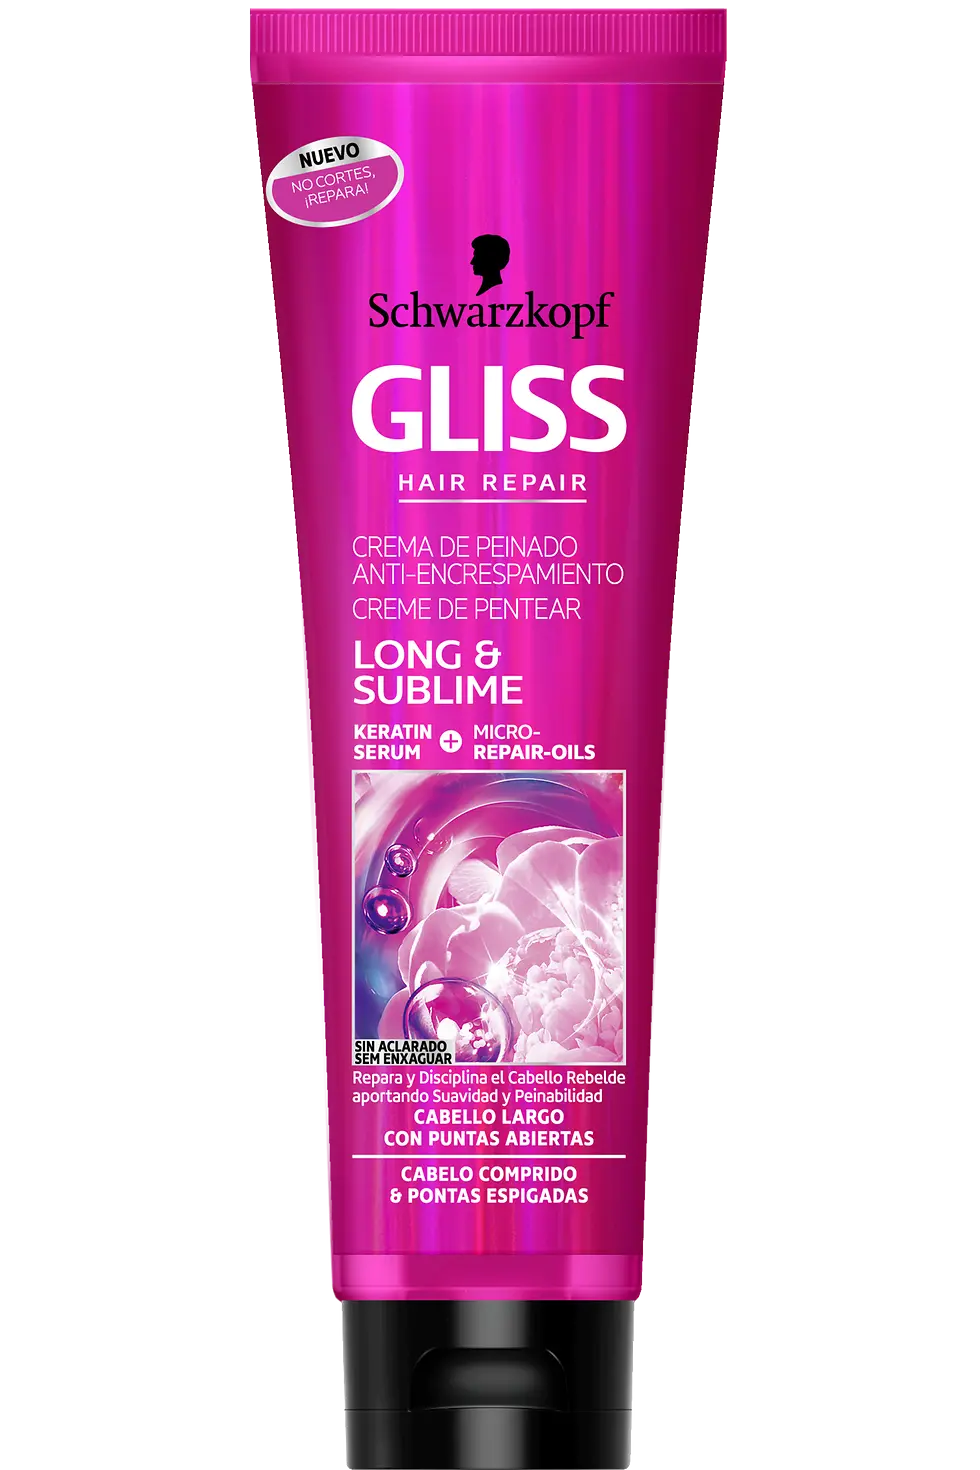 GLISS Crema de Peinado Anti-encrespamiento Long&Sublime